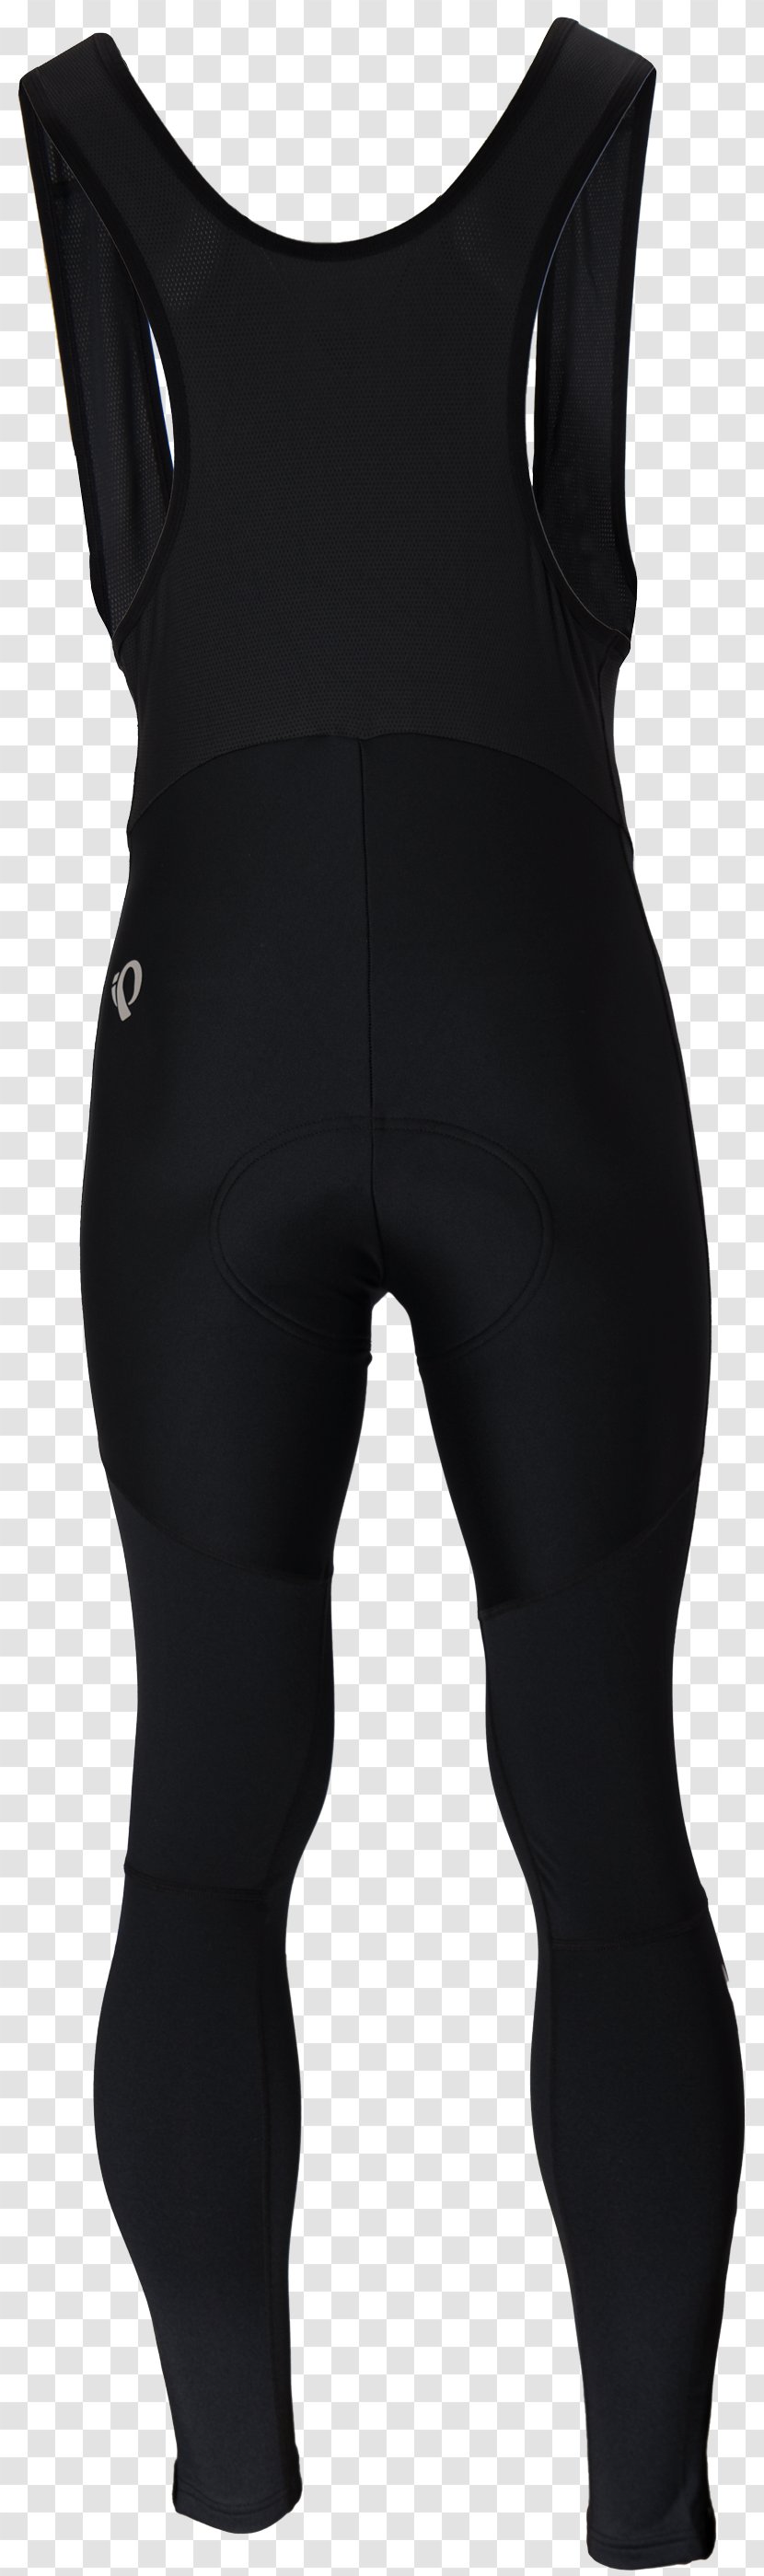 Shoulder Pants Black M - Personal Protective Equipment - Tights Transparent PNG